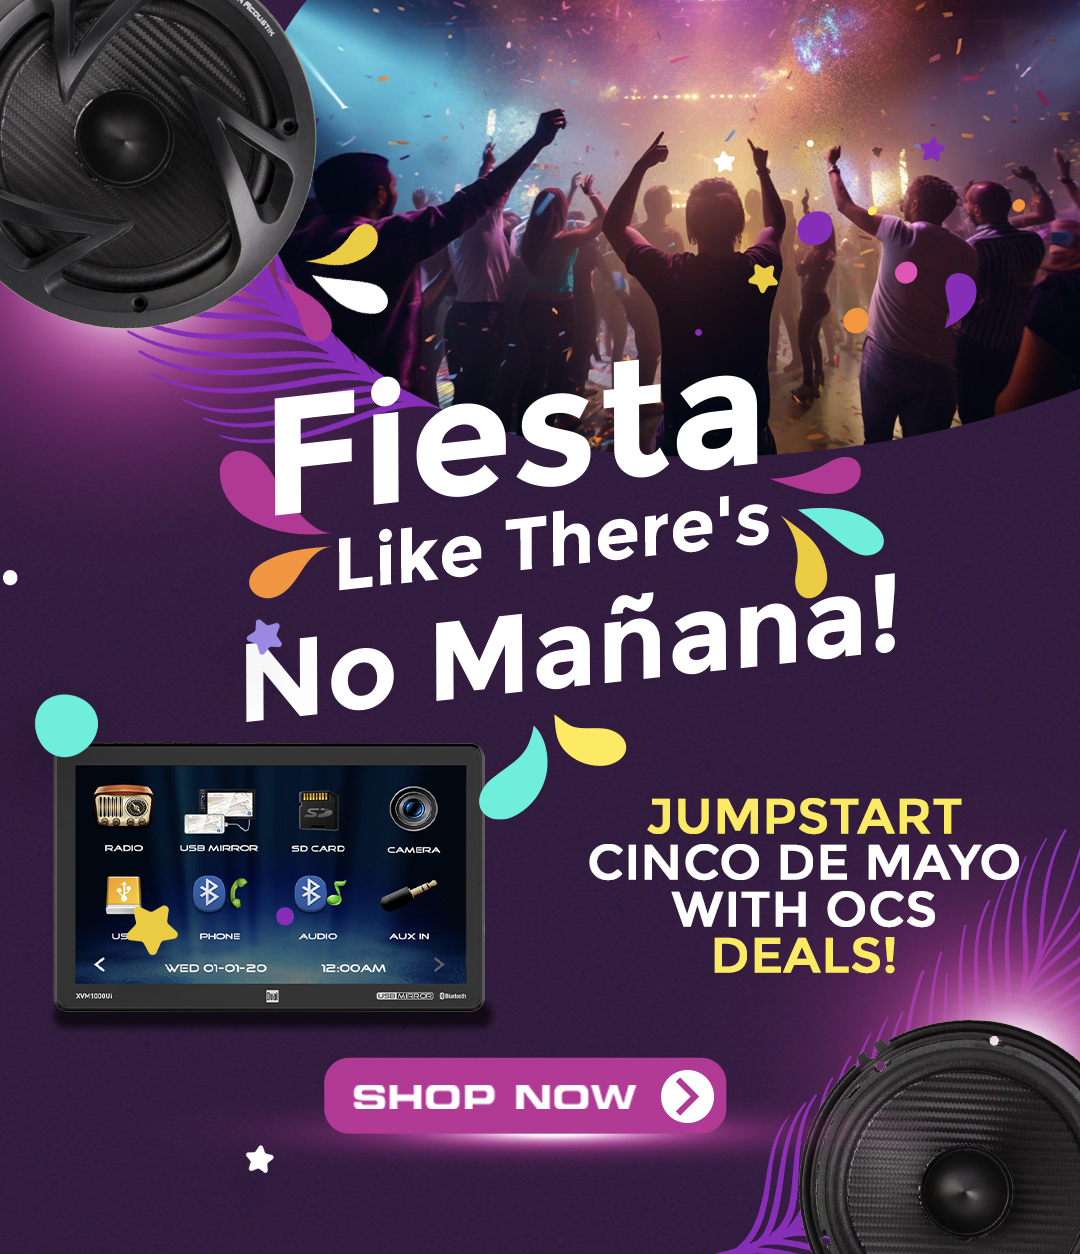 Fiesta Like There's No Mañana! Jumpstart Cinco de Mayo with OCS Deals!